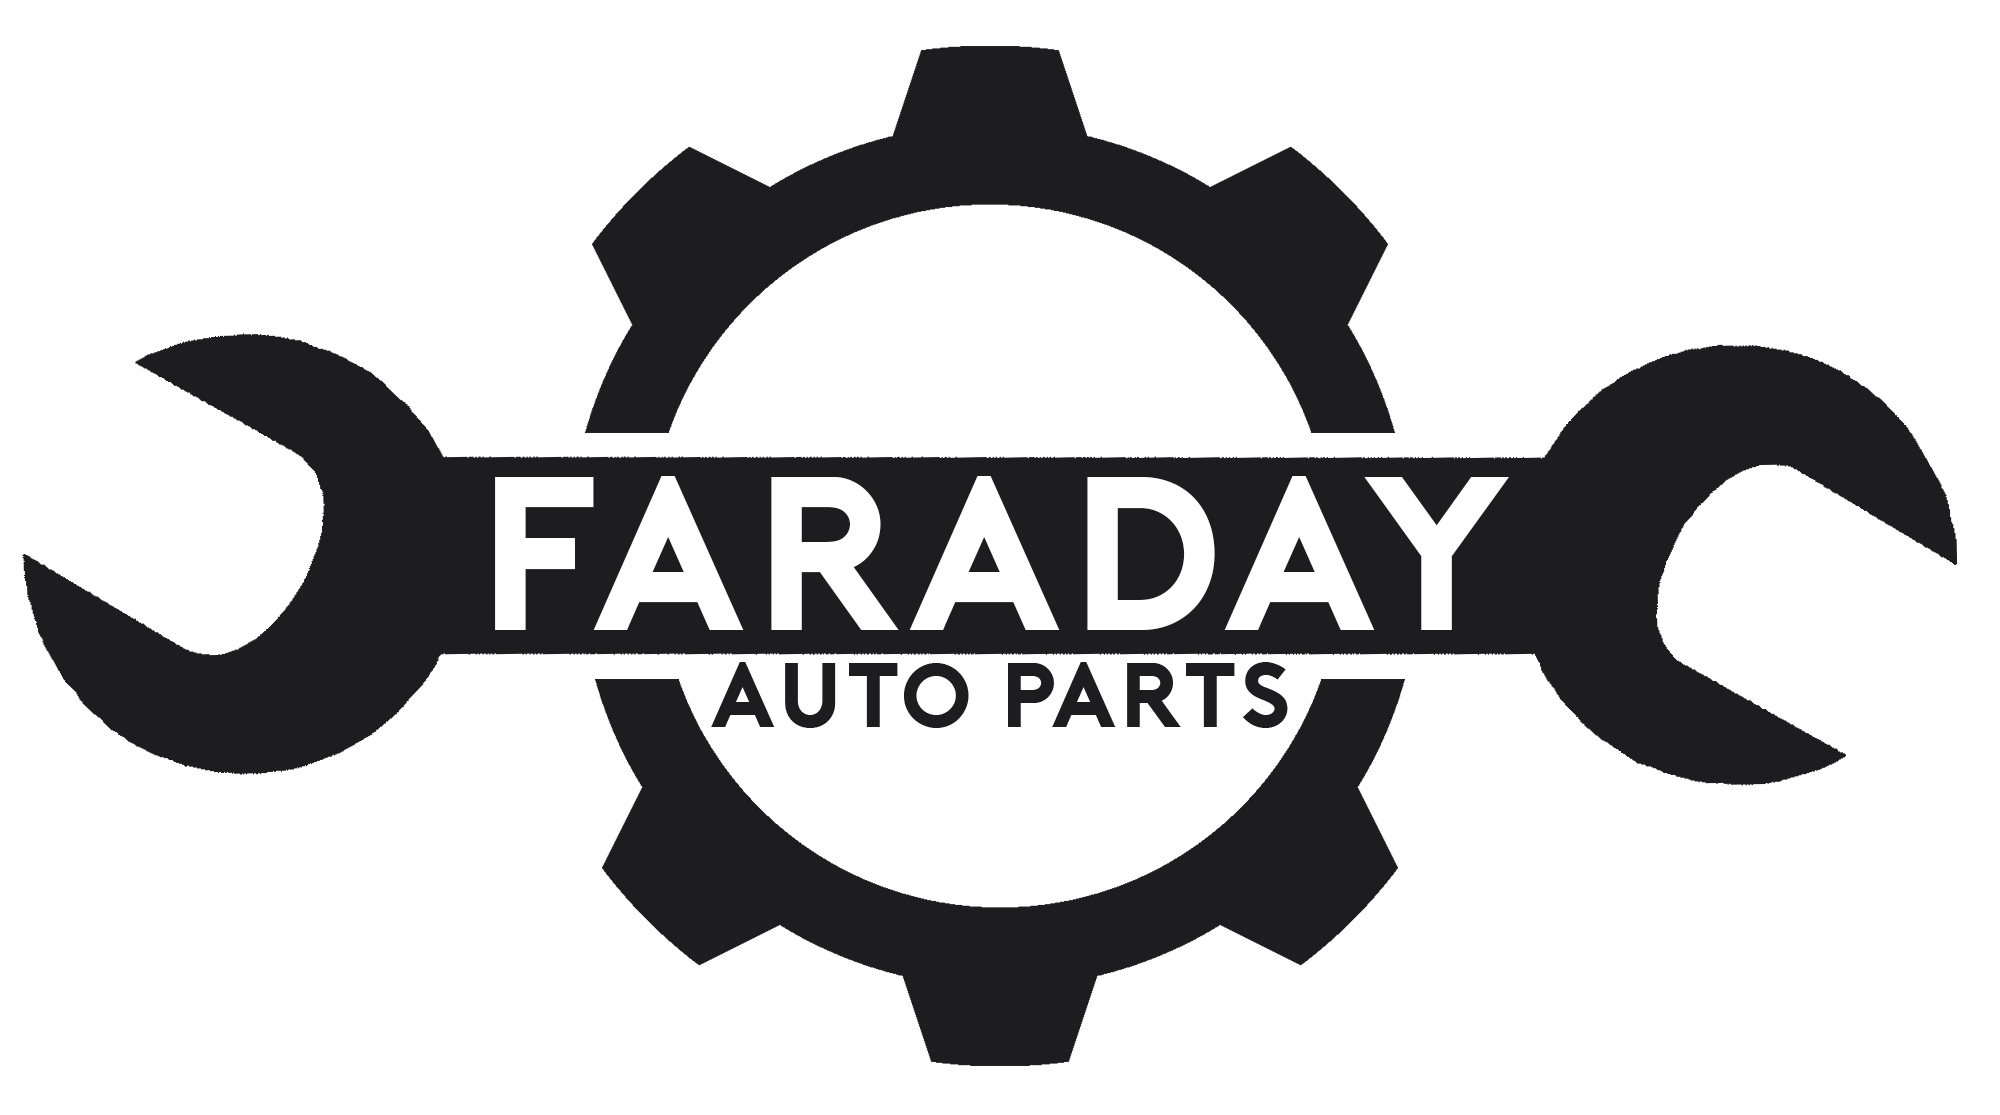 FaradayAutoParts